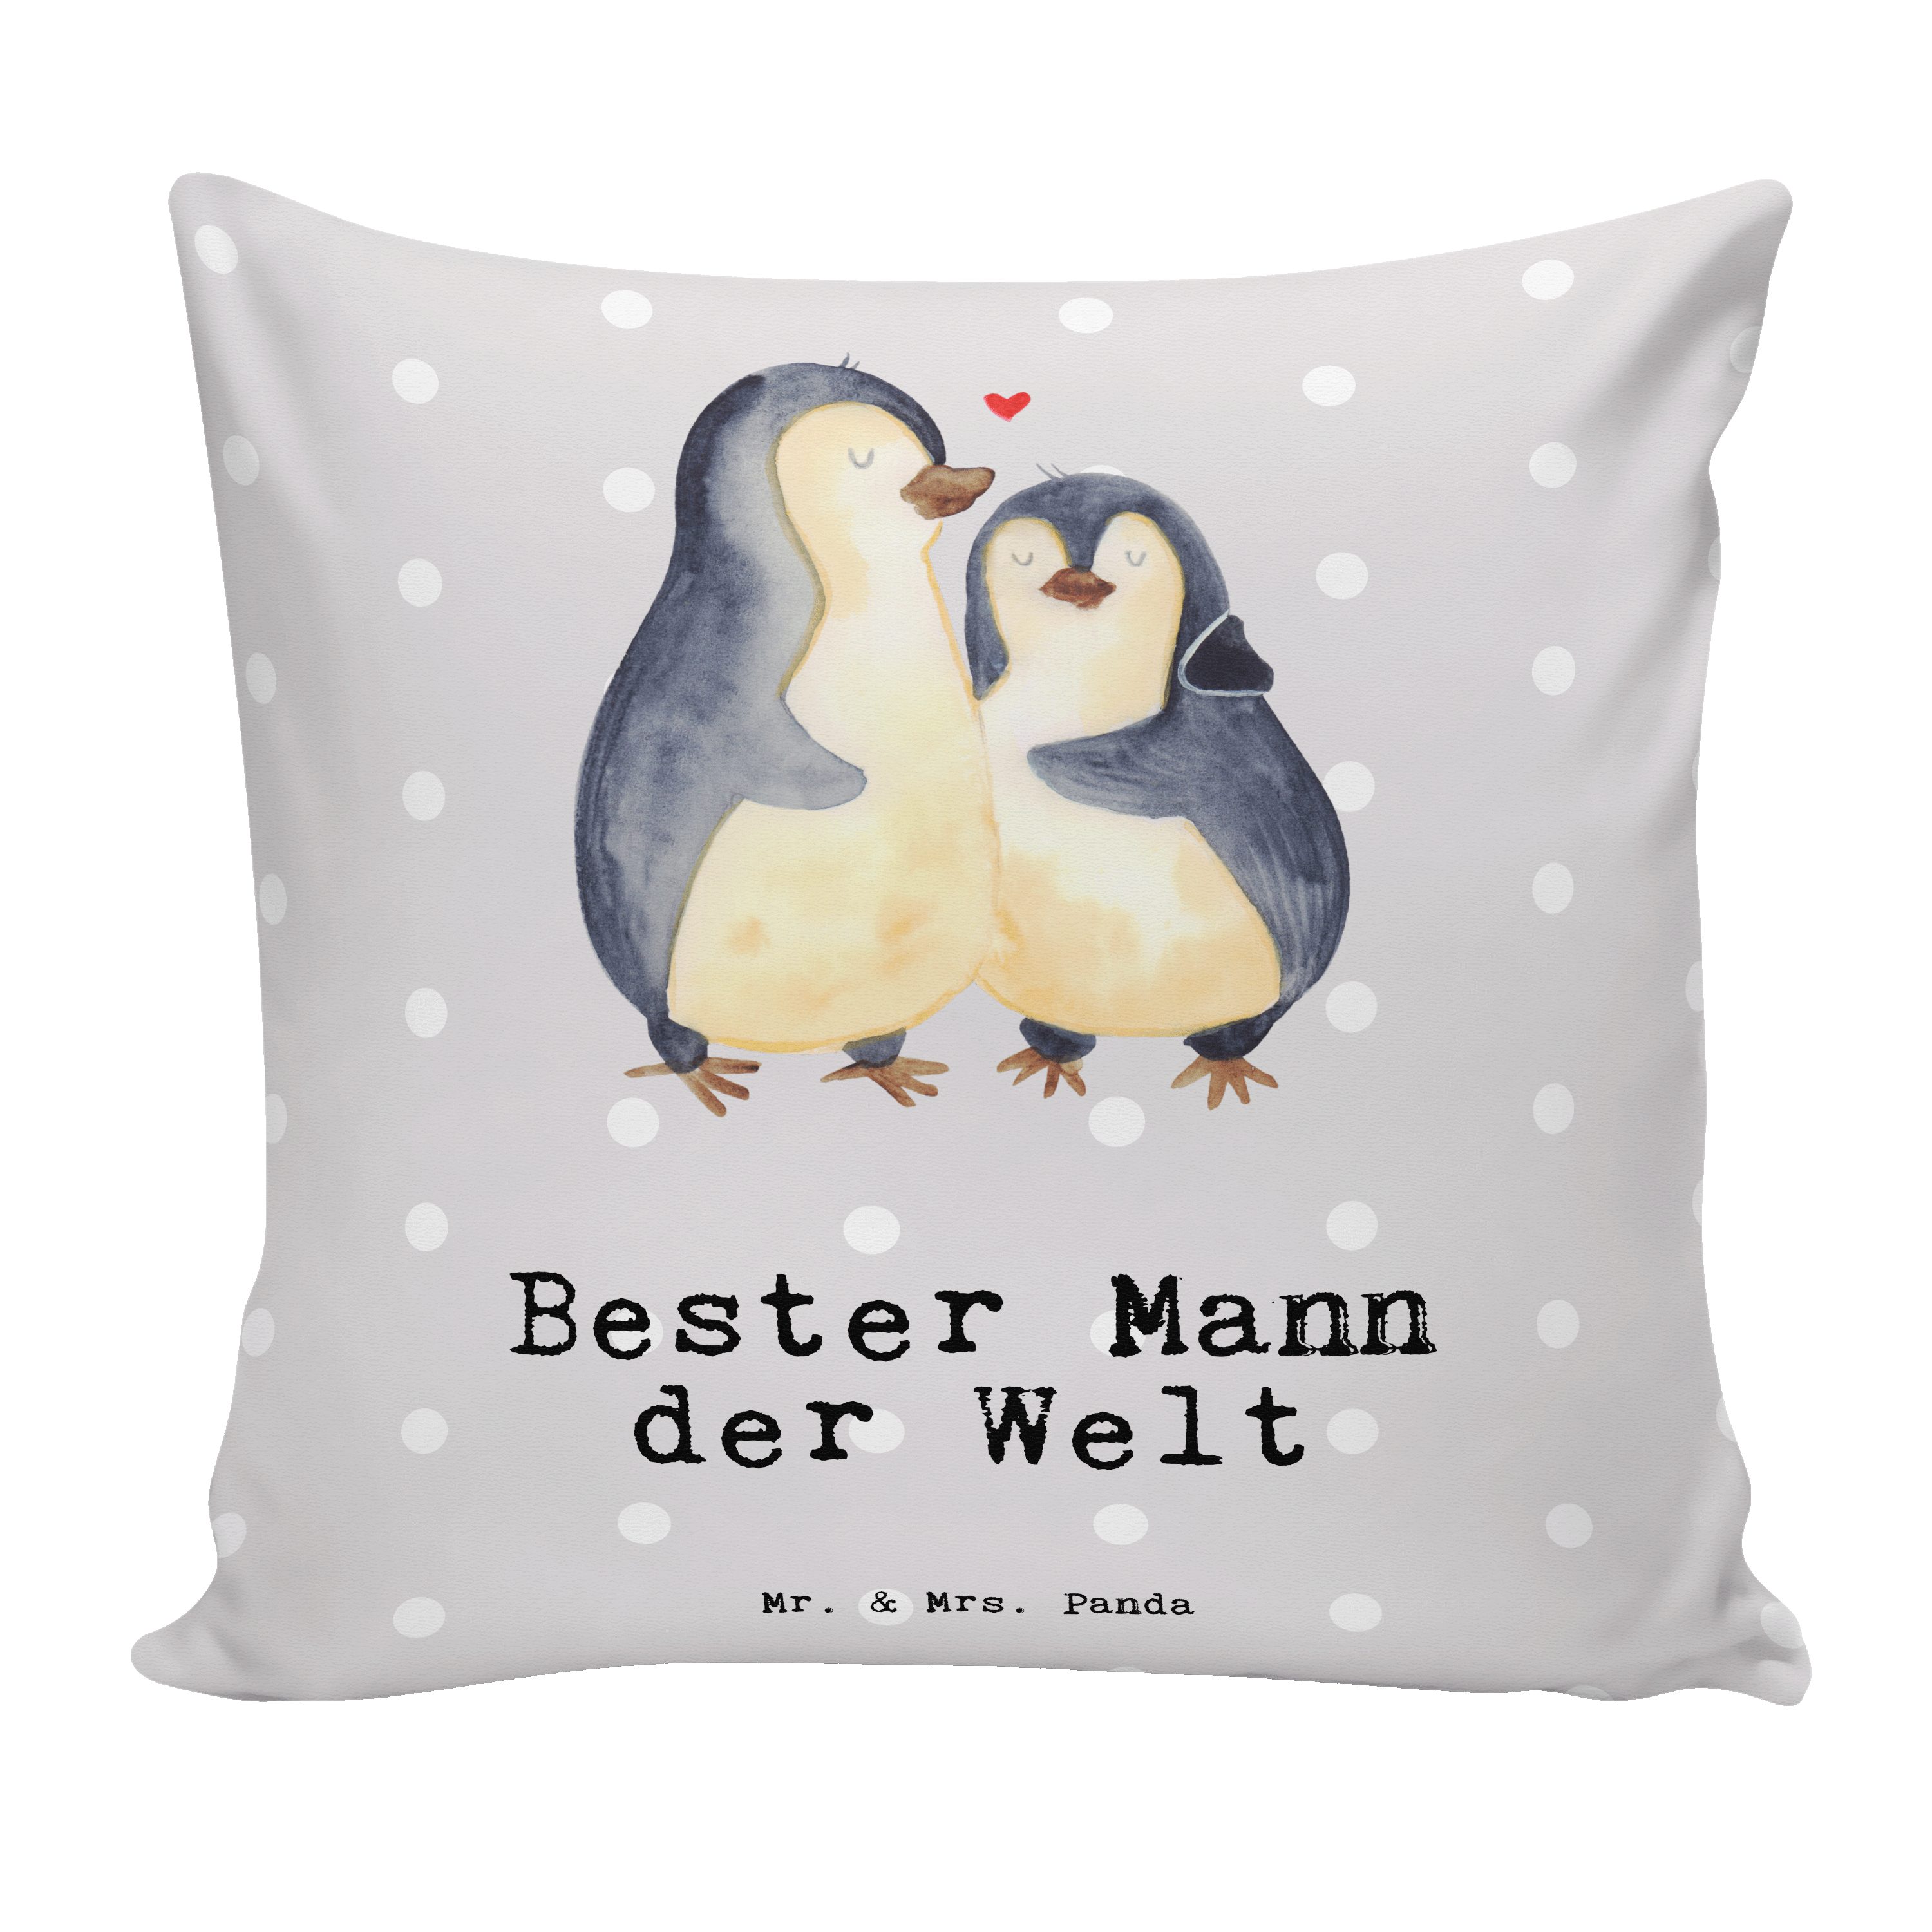 Gatte, der - Welt Panda Geschenk, & Mann Bester Mr. Grau Liebli Pinguin - Dekokissen Pastell Mrs.